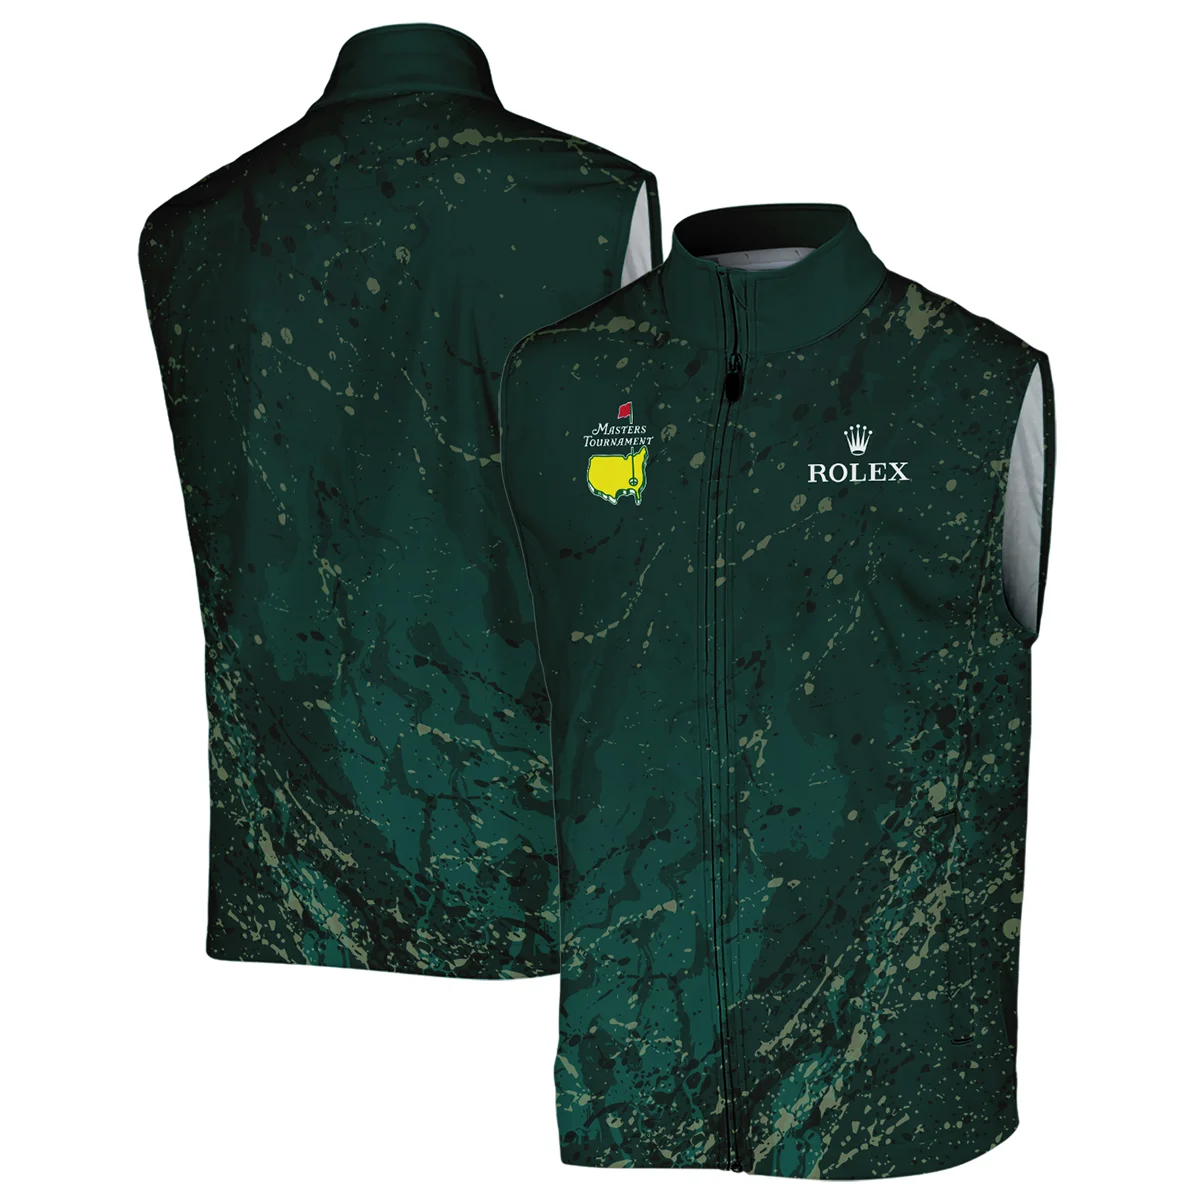 Old Cracked Texture With Gold Splash Paint Masters Tournament Rolex Unisex Sweatshirt Style Classic Sweatshirt